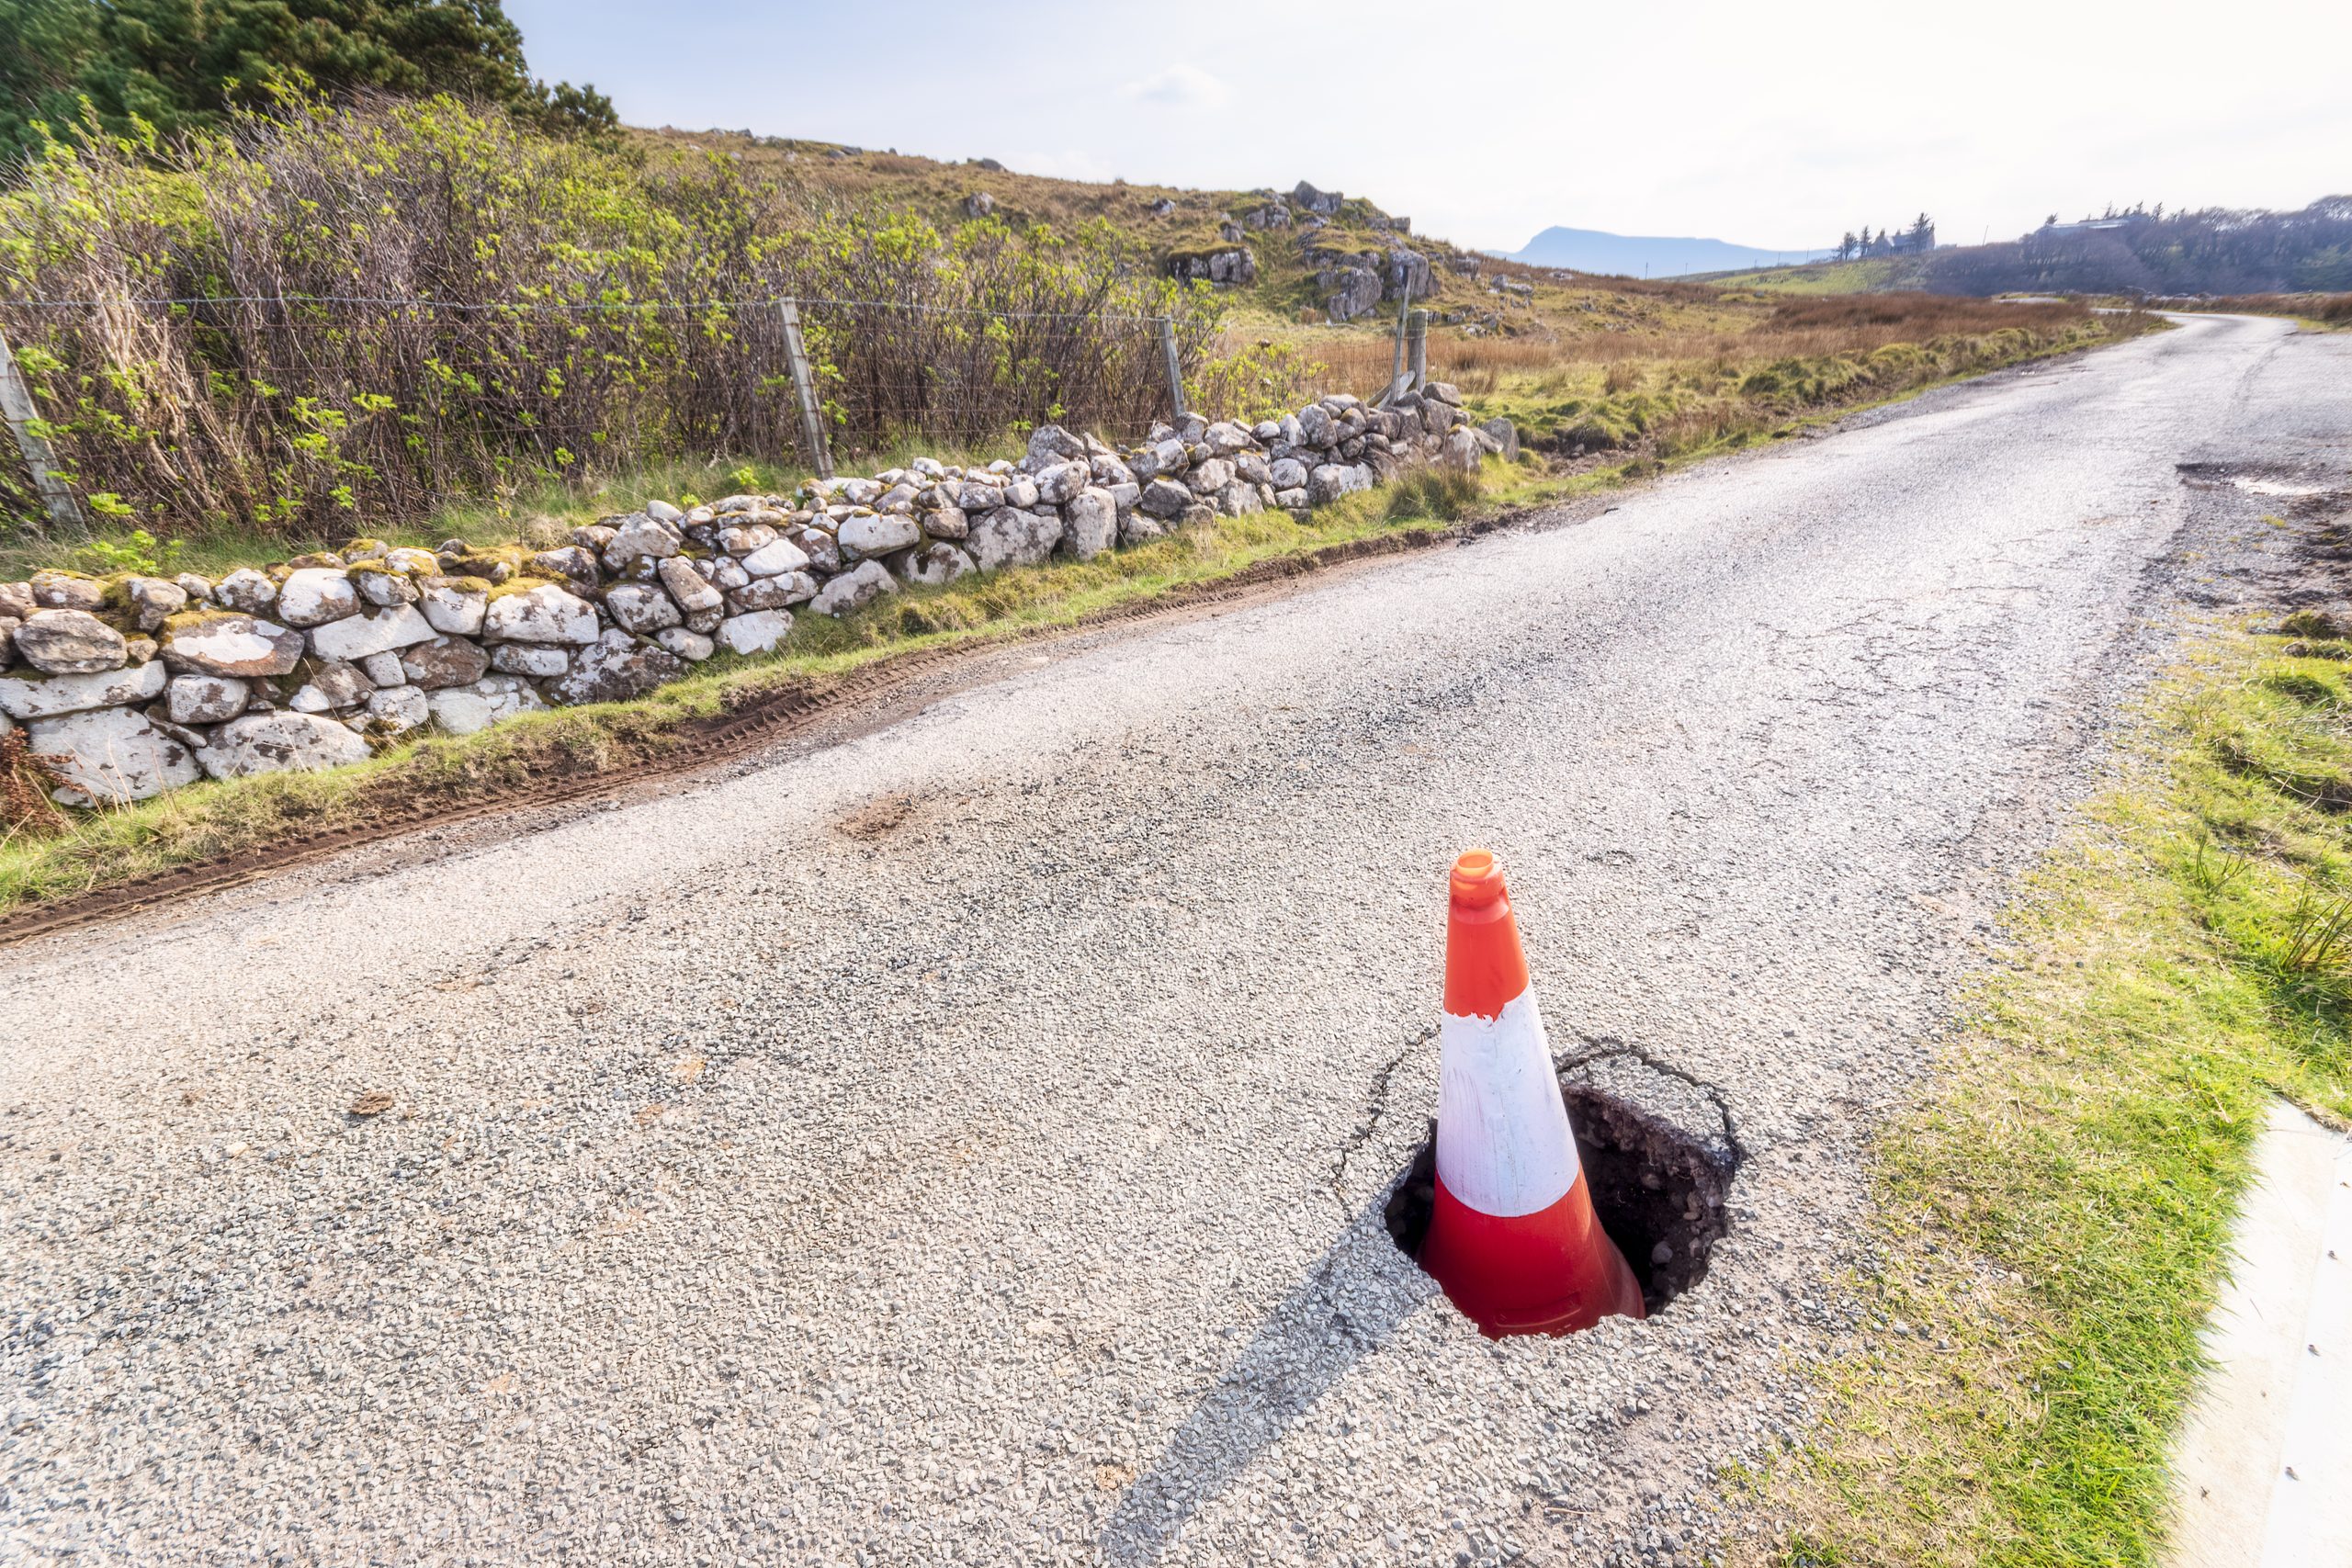 Pothole plague and long repair times drive motorists potty